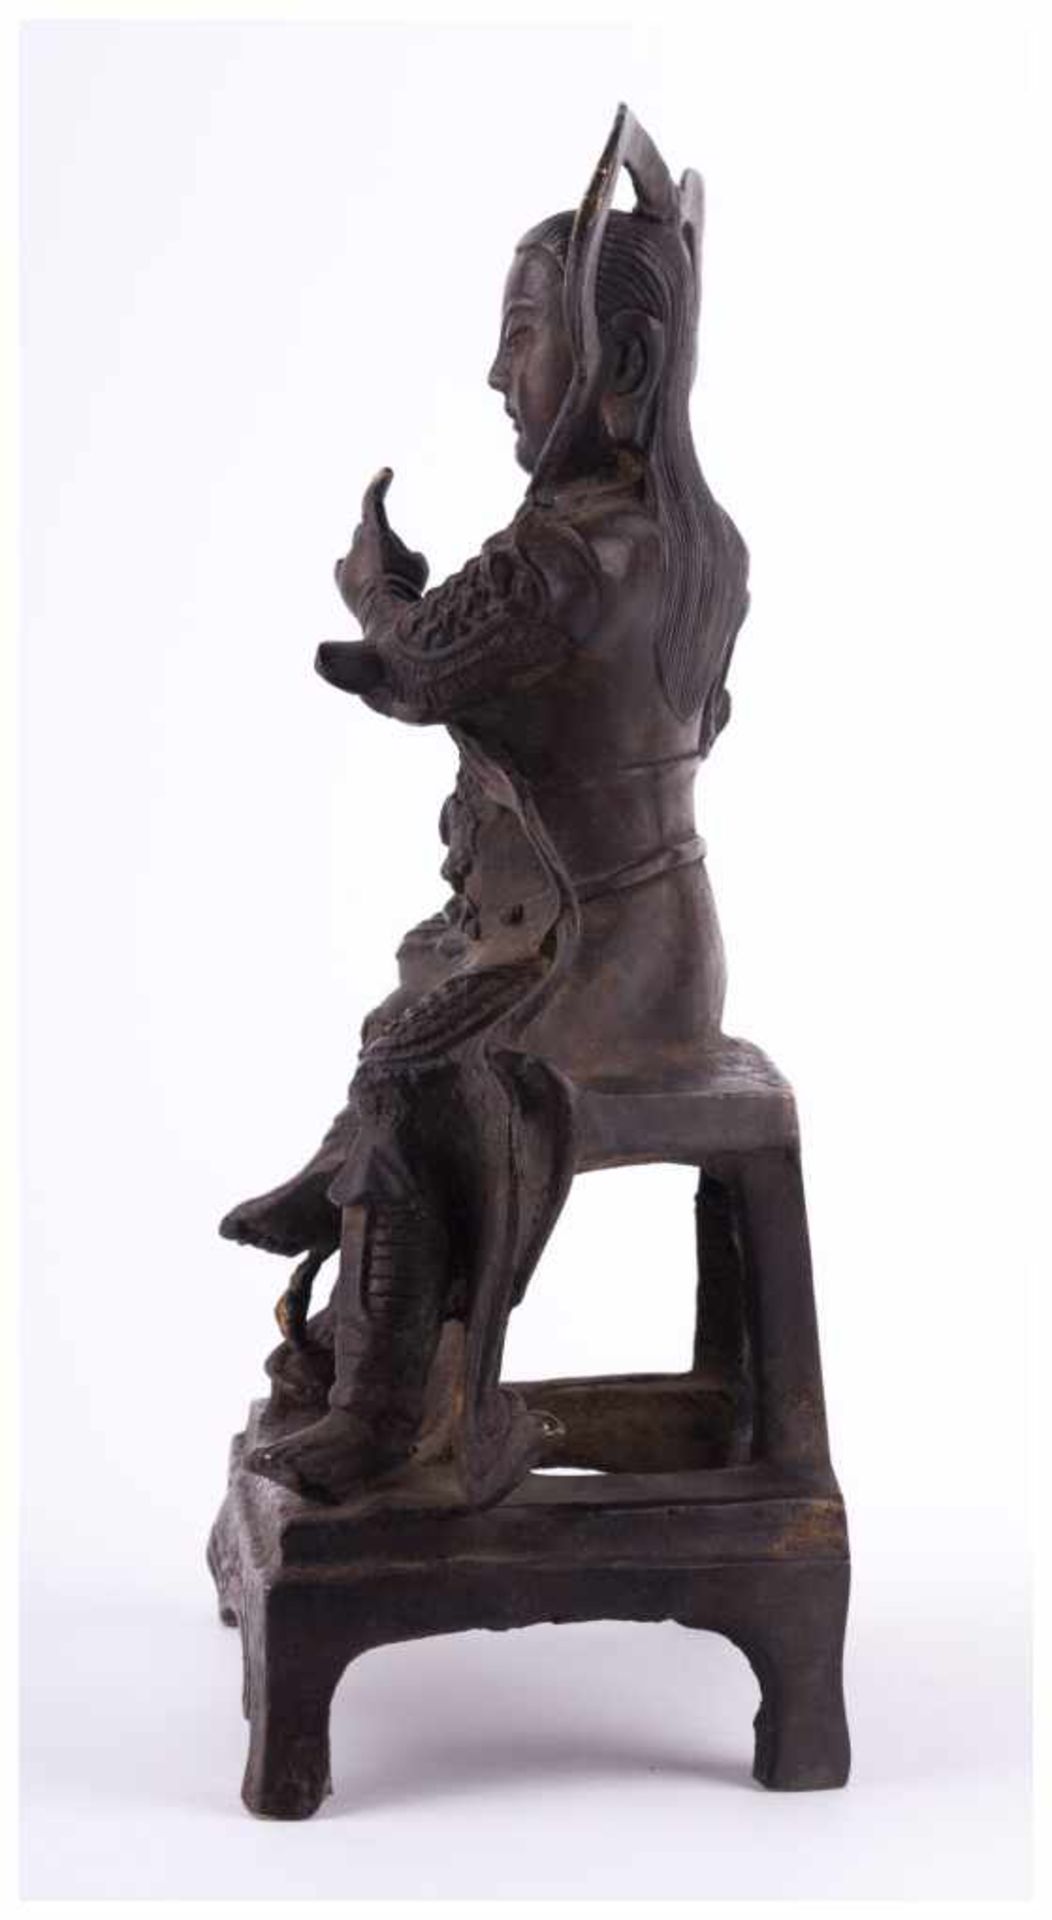 Alte Skulptur China / Old sculpture, China - Bronze, braun Patina mit Resten alter [...] - Image 10 of 14